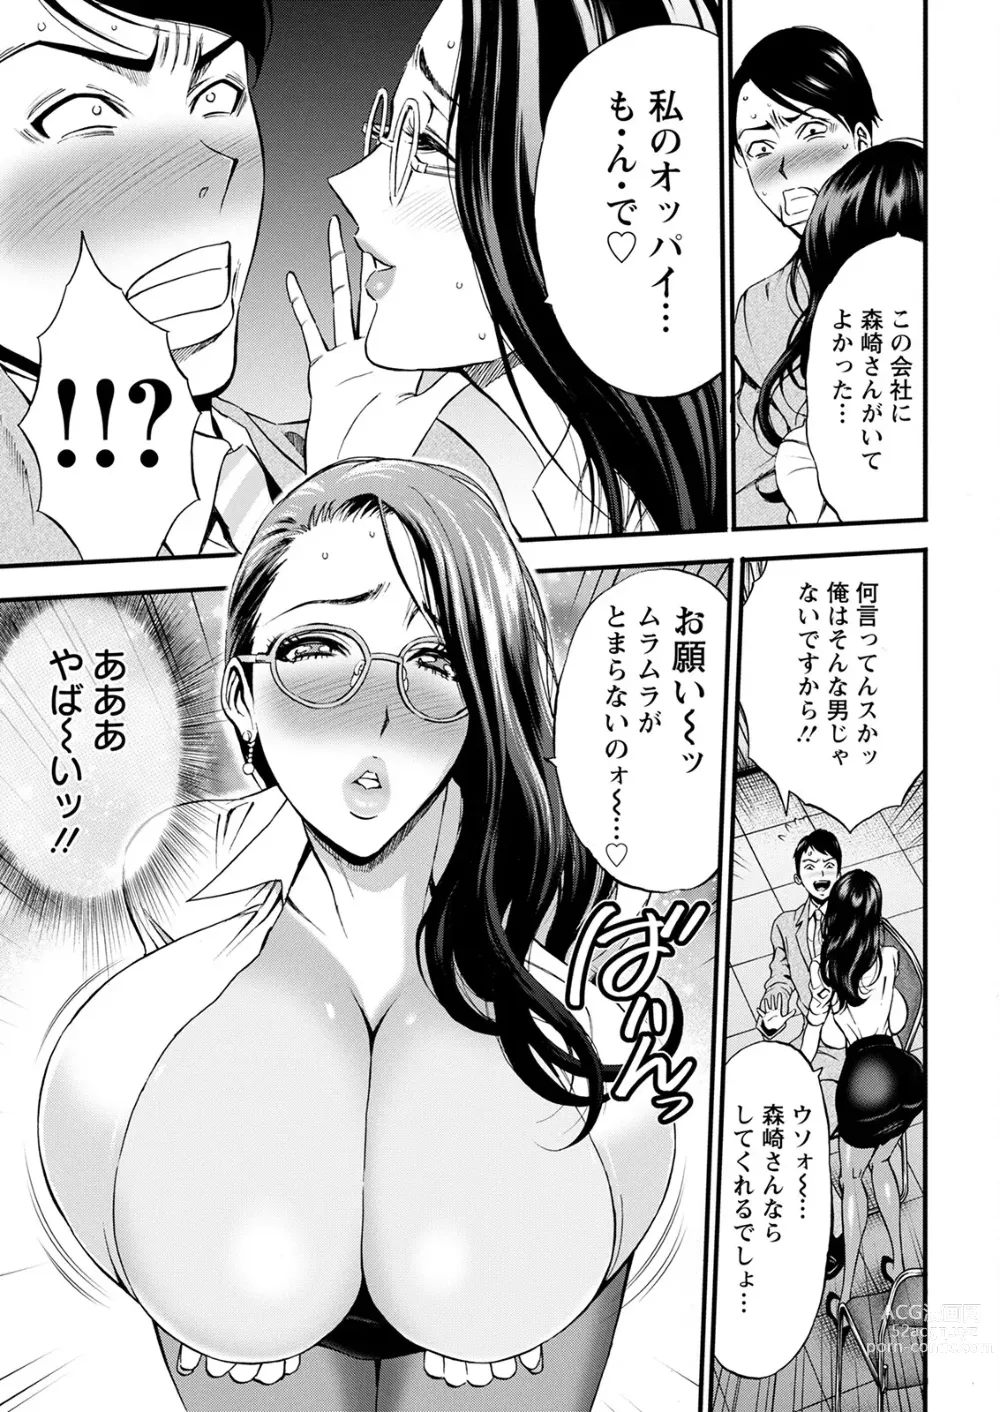 Page 16 of manga Compliance Yuruyuru Chimarisan 1-9